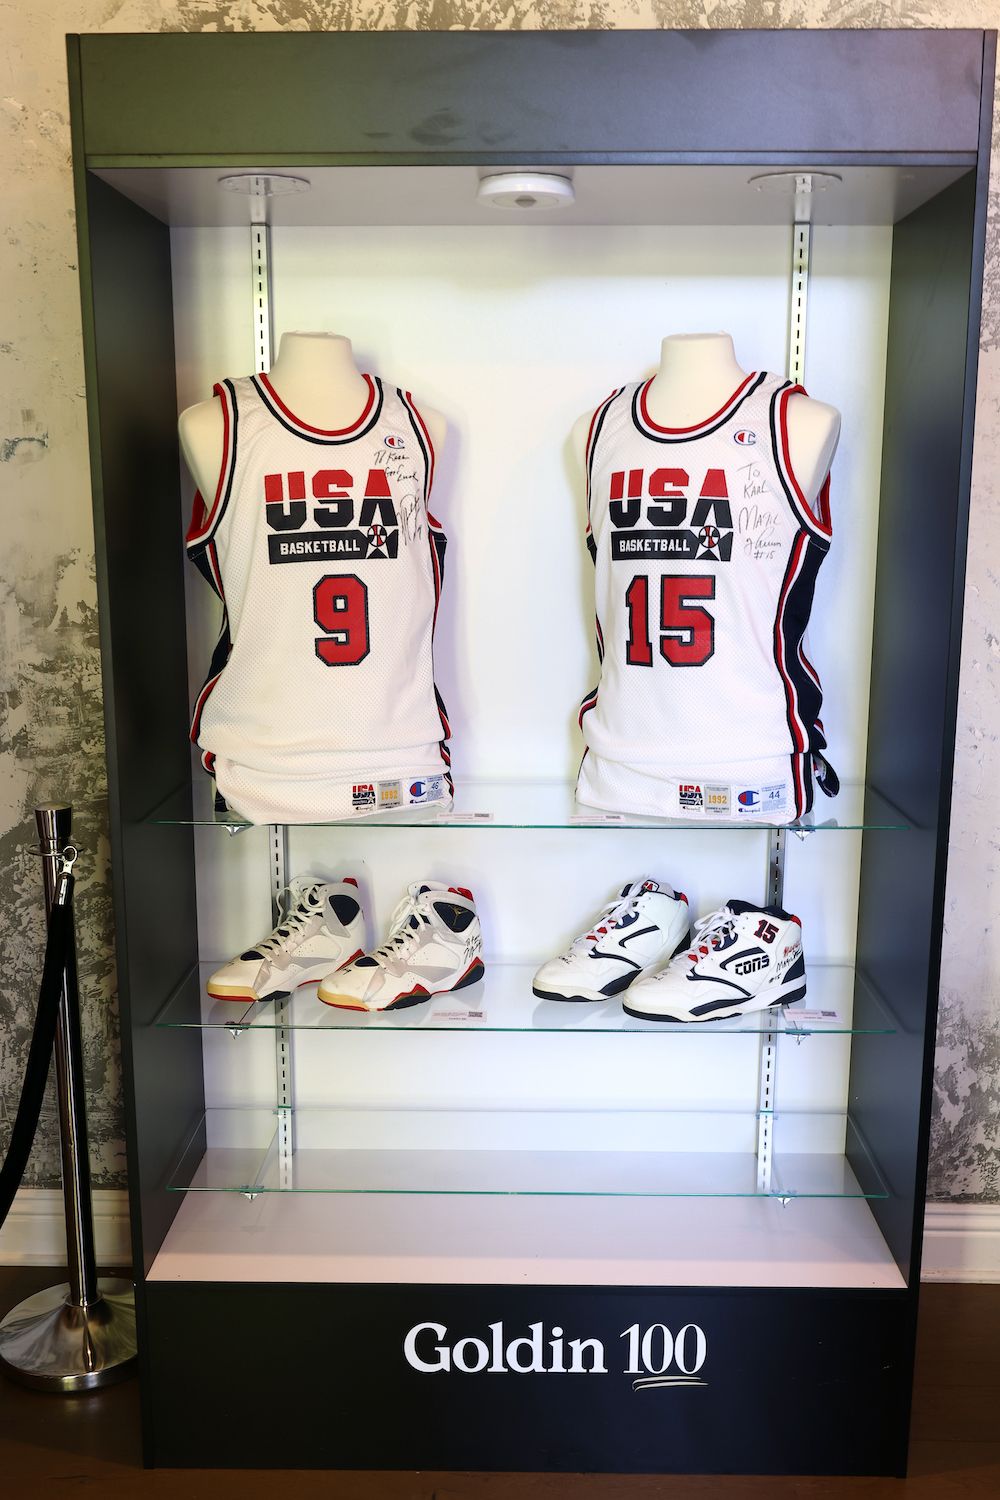 Michael Jordan's Flu Game shoes, Dream Team jerseys, and more sports memorbilia treasures